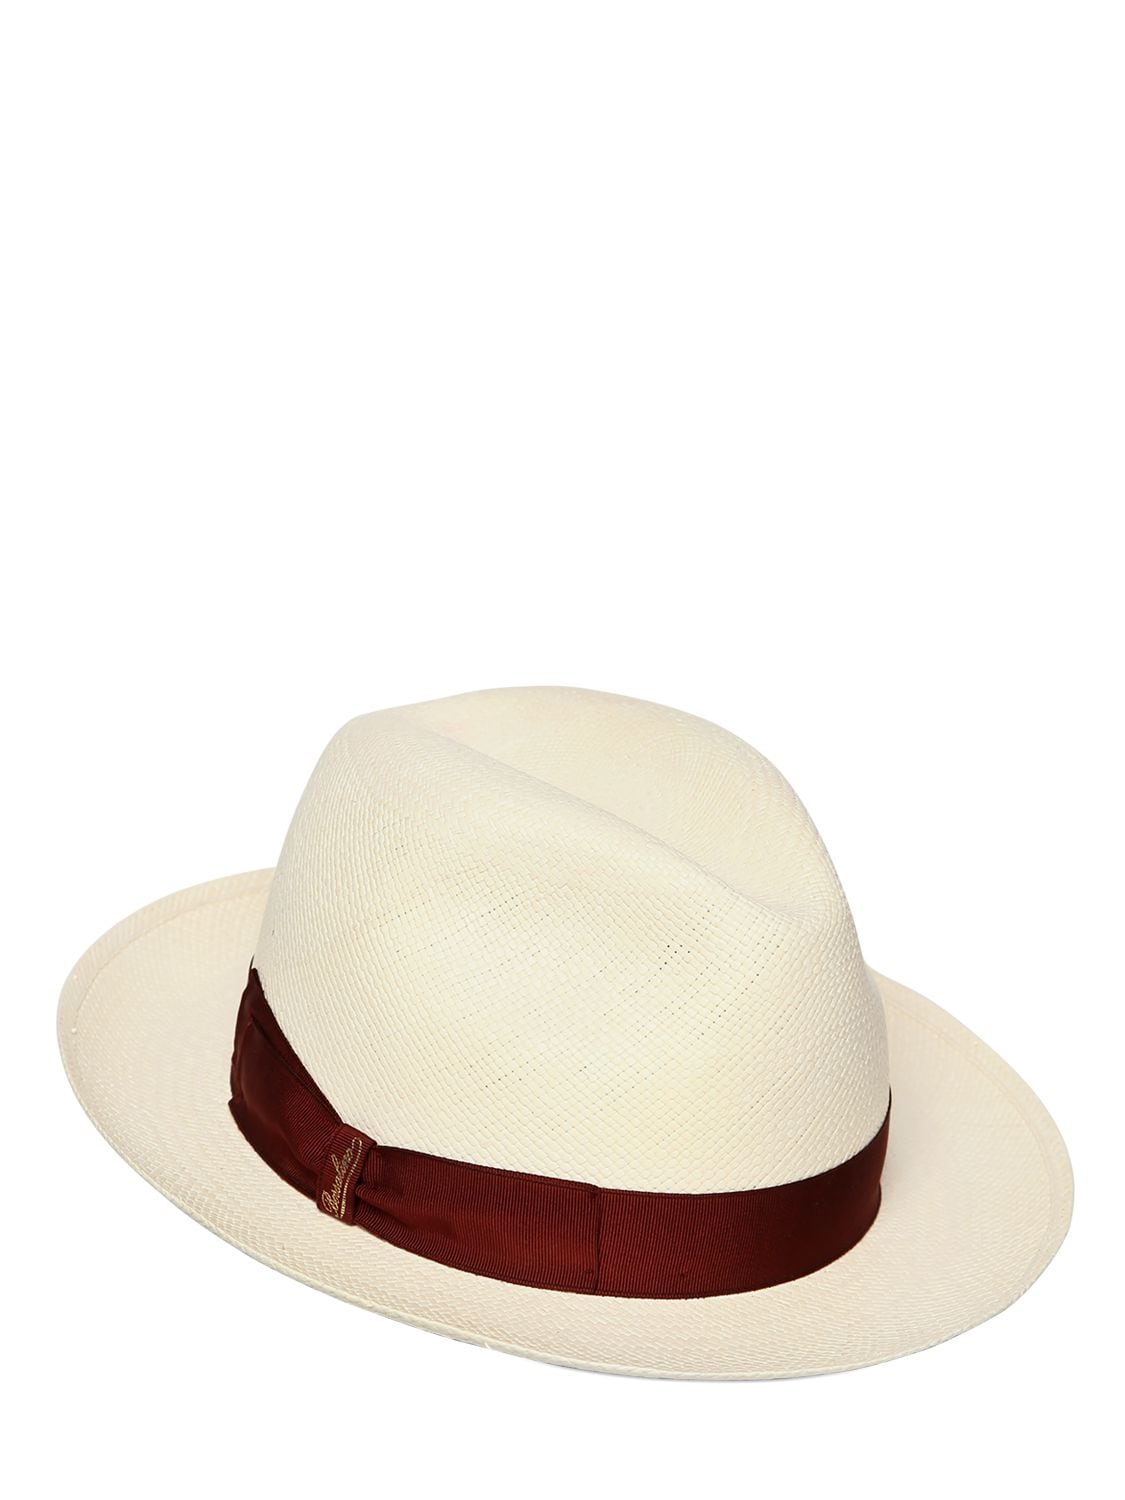 Borsalino Quito Straw Panama Hat In White/bordeaux